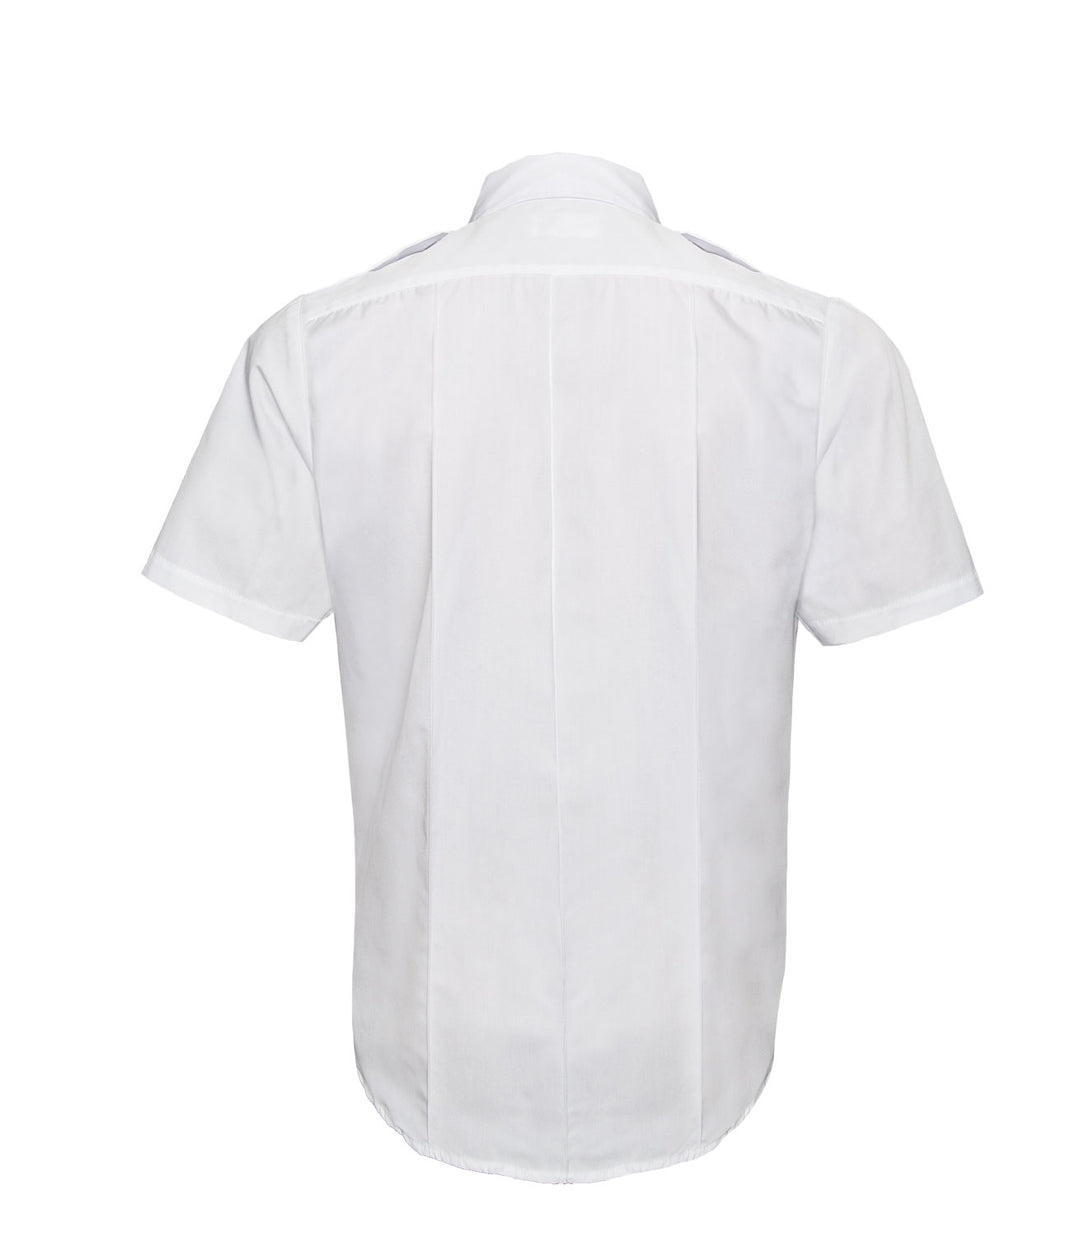 Mens Short Sleeve Uniform Shirt by Rothco